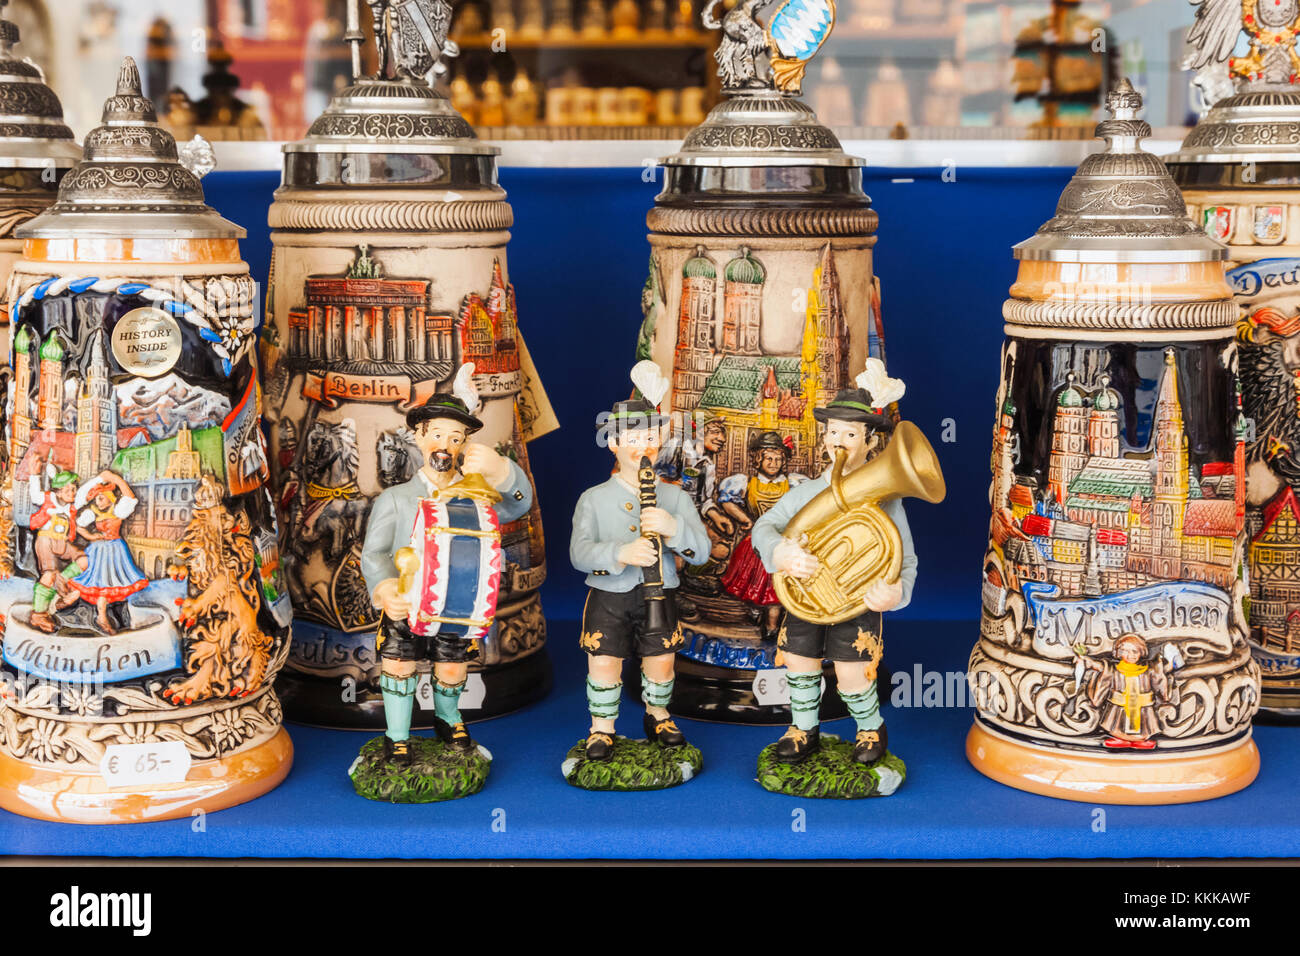 Germany, Bavaria, Munich, Marienplatz, Souvenir Shop Display of Beersteins  and Figures Dressed as Bavarian Musicians Stock Photo - Alamy